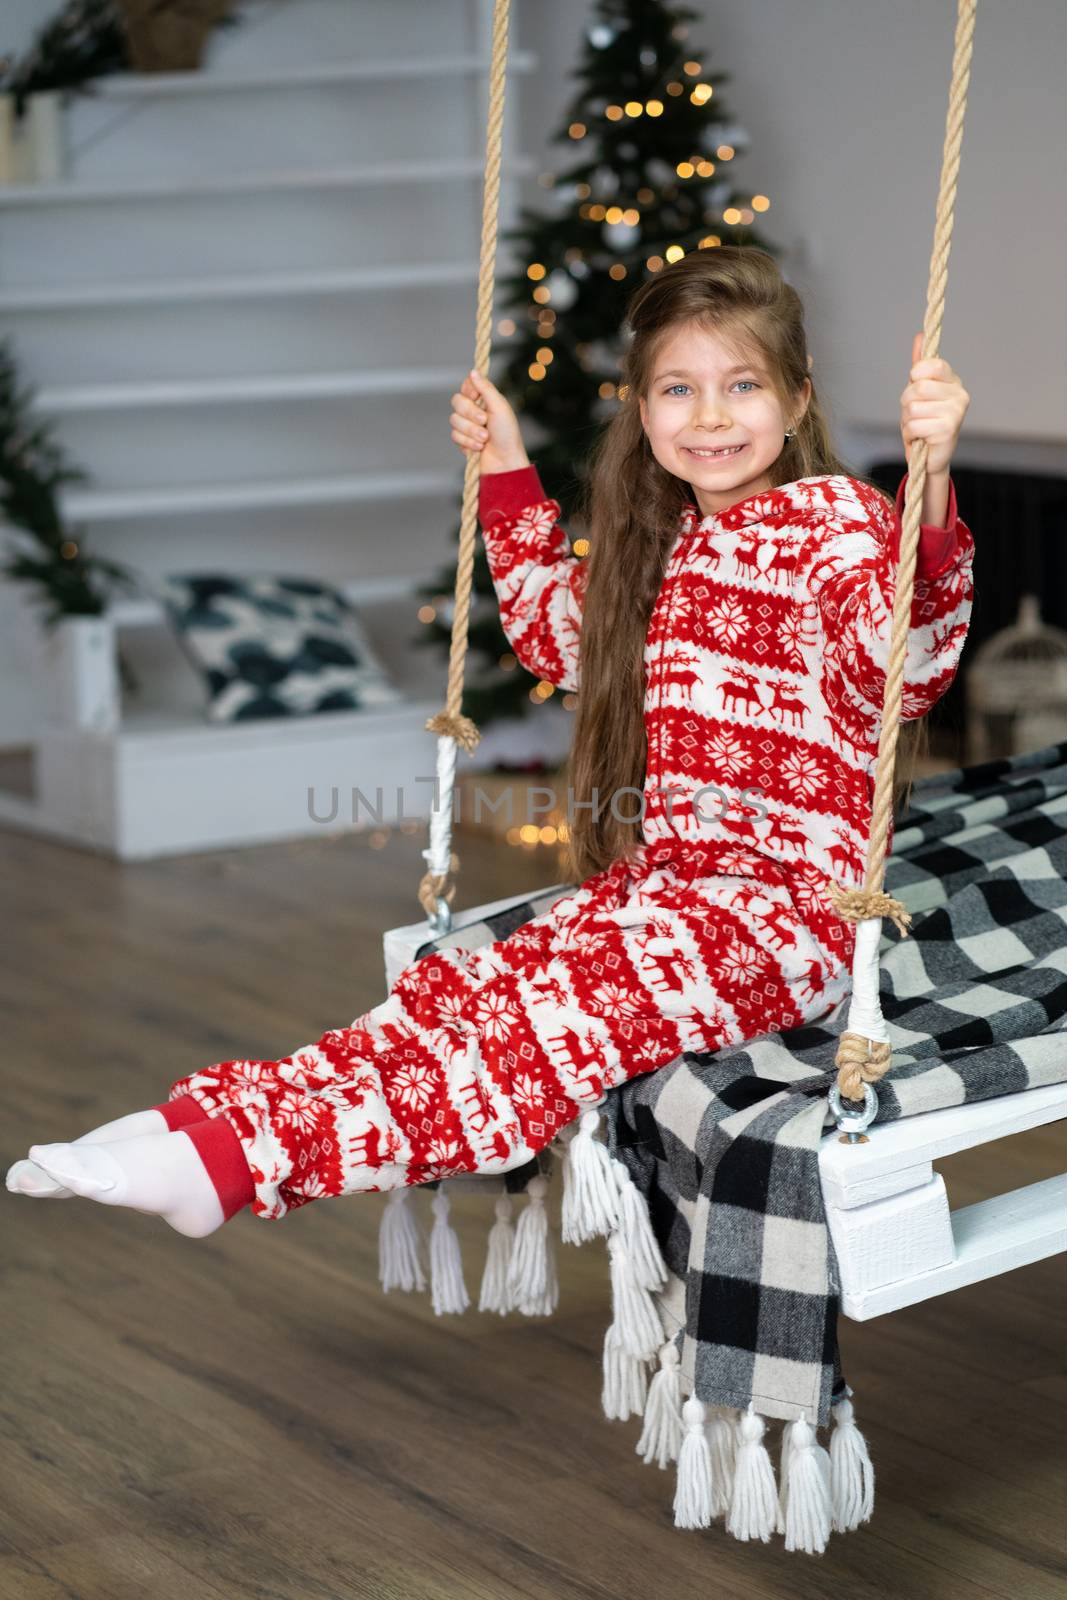 A little girl in pajamas can't sleep on a festive night. Christmas magic fairy tale. Happy childhood.